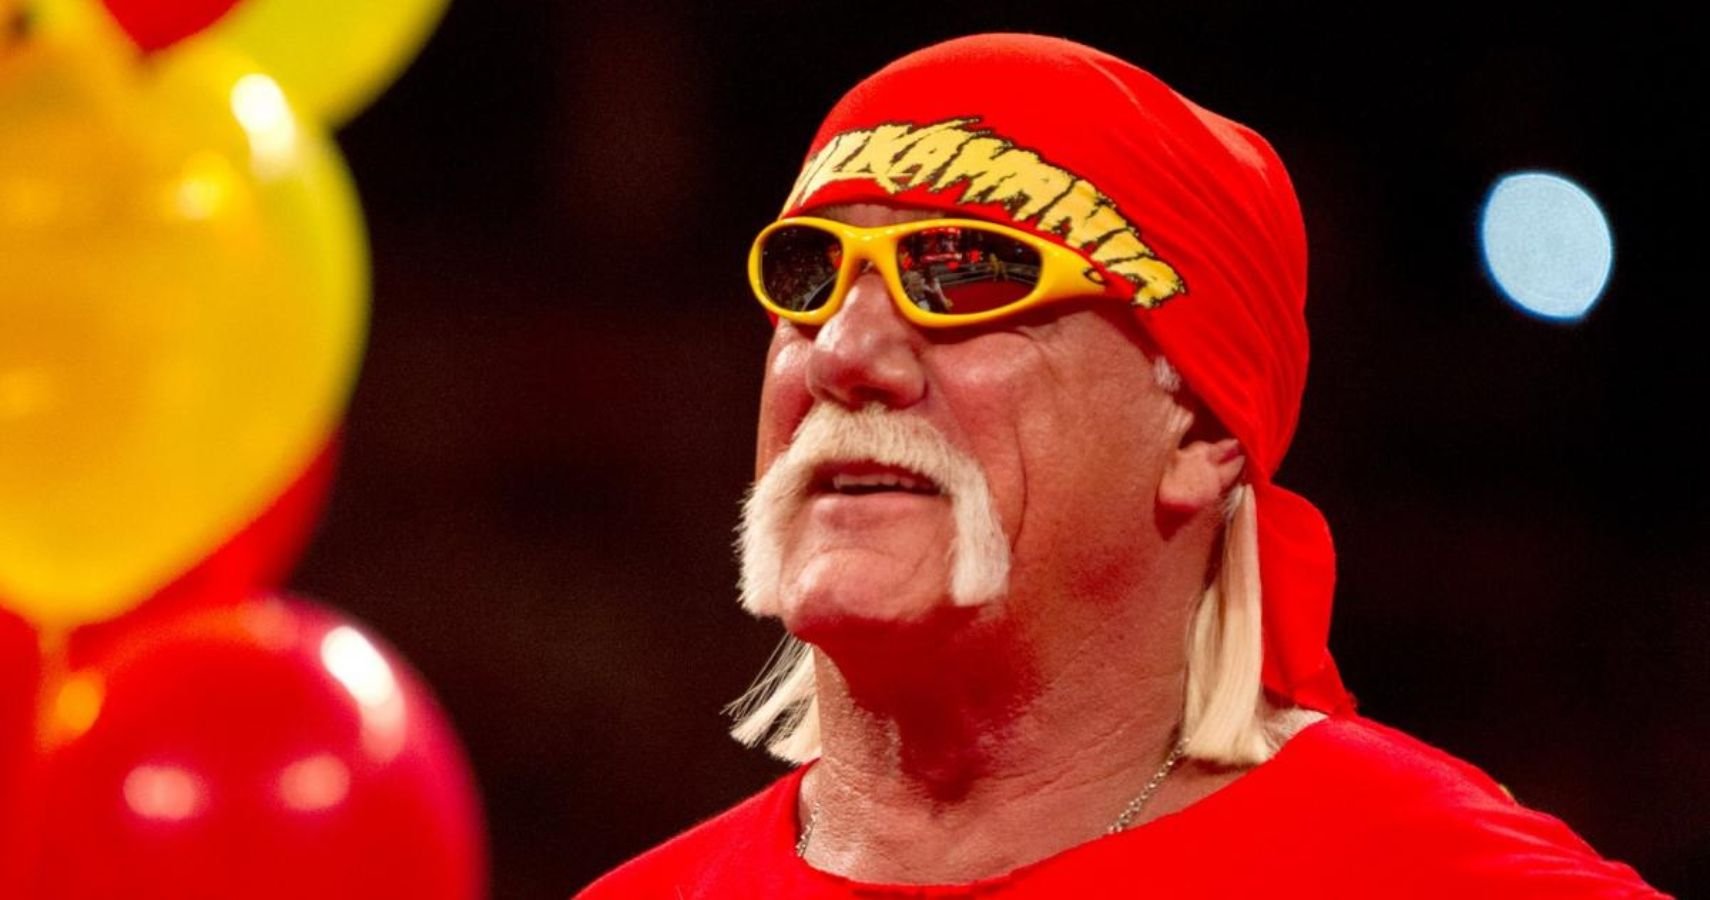 Hulk Hogan Reveals His Picks For The Universal WWE Title WrestleMania Matches